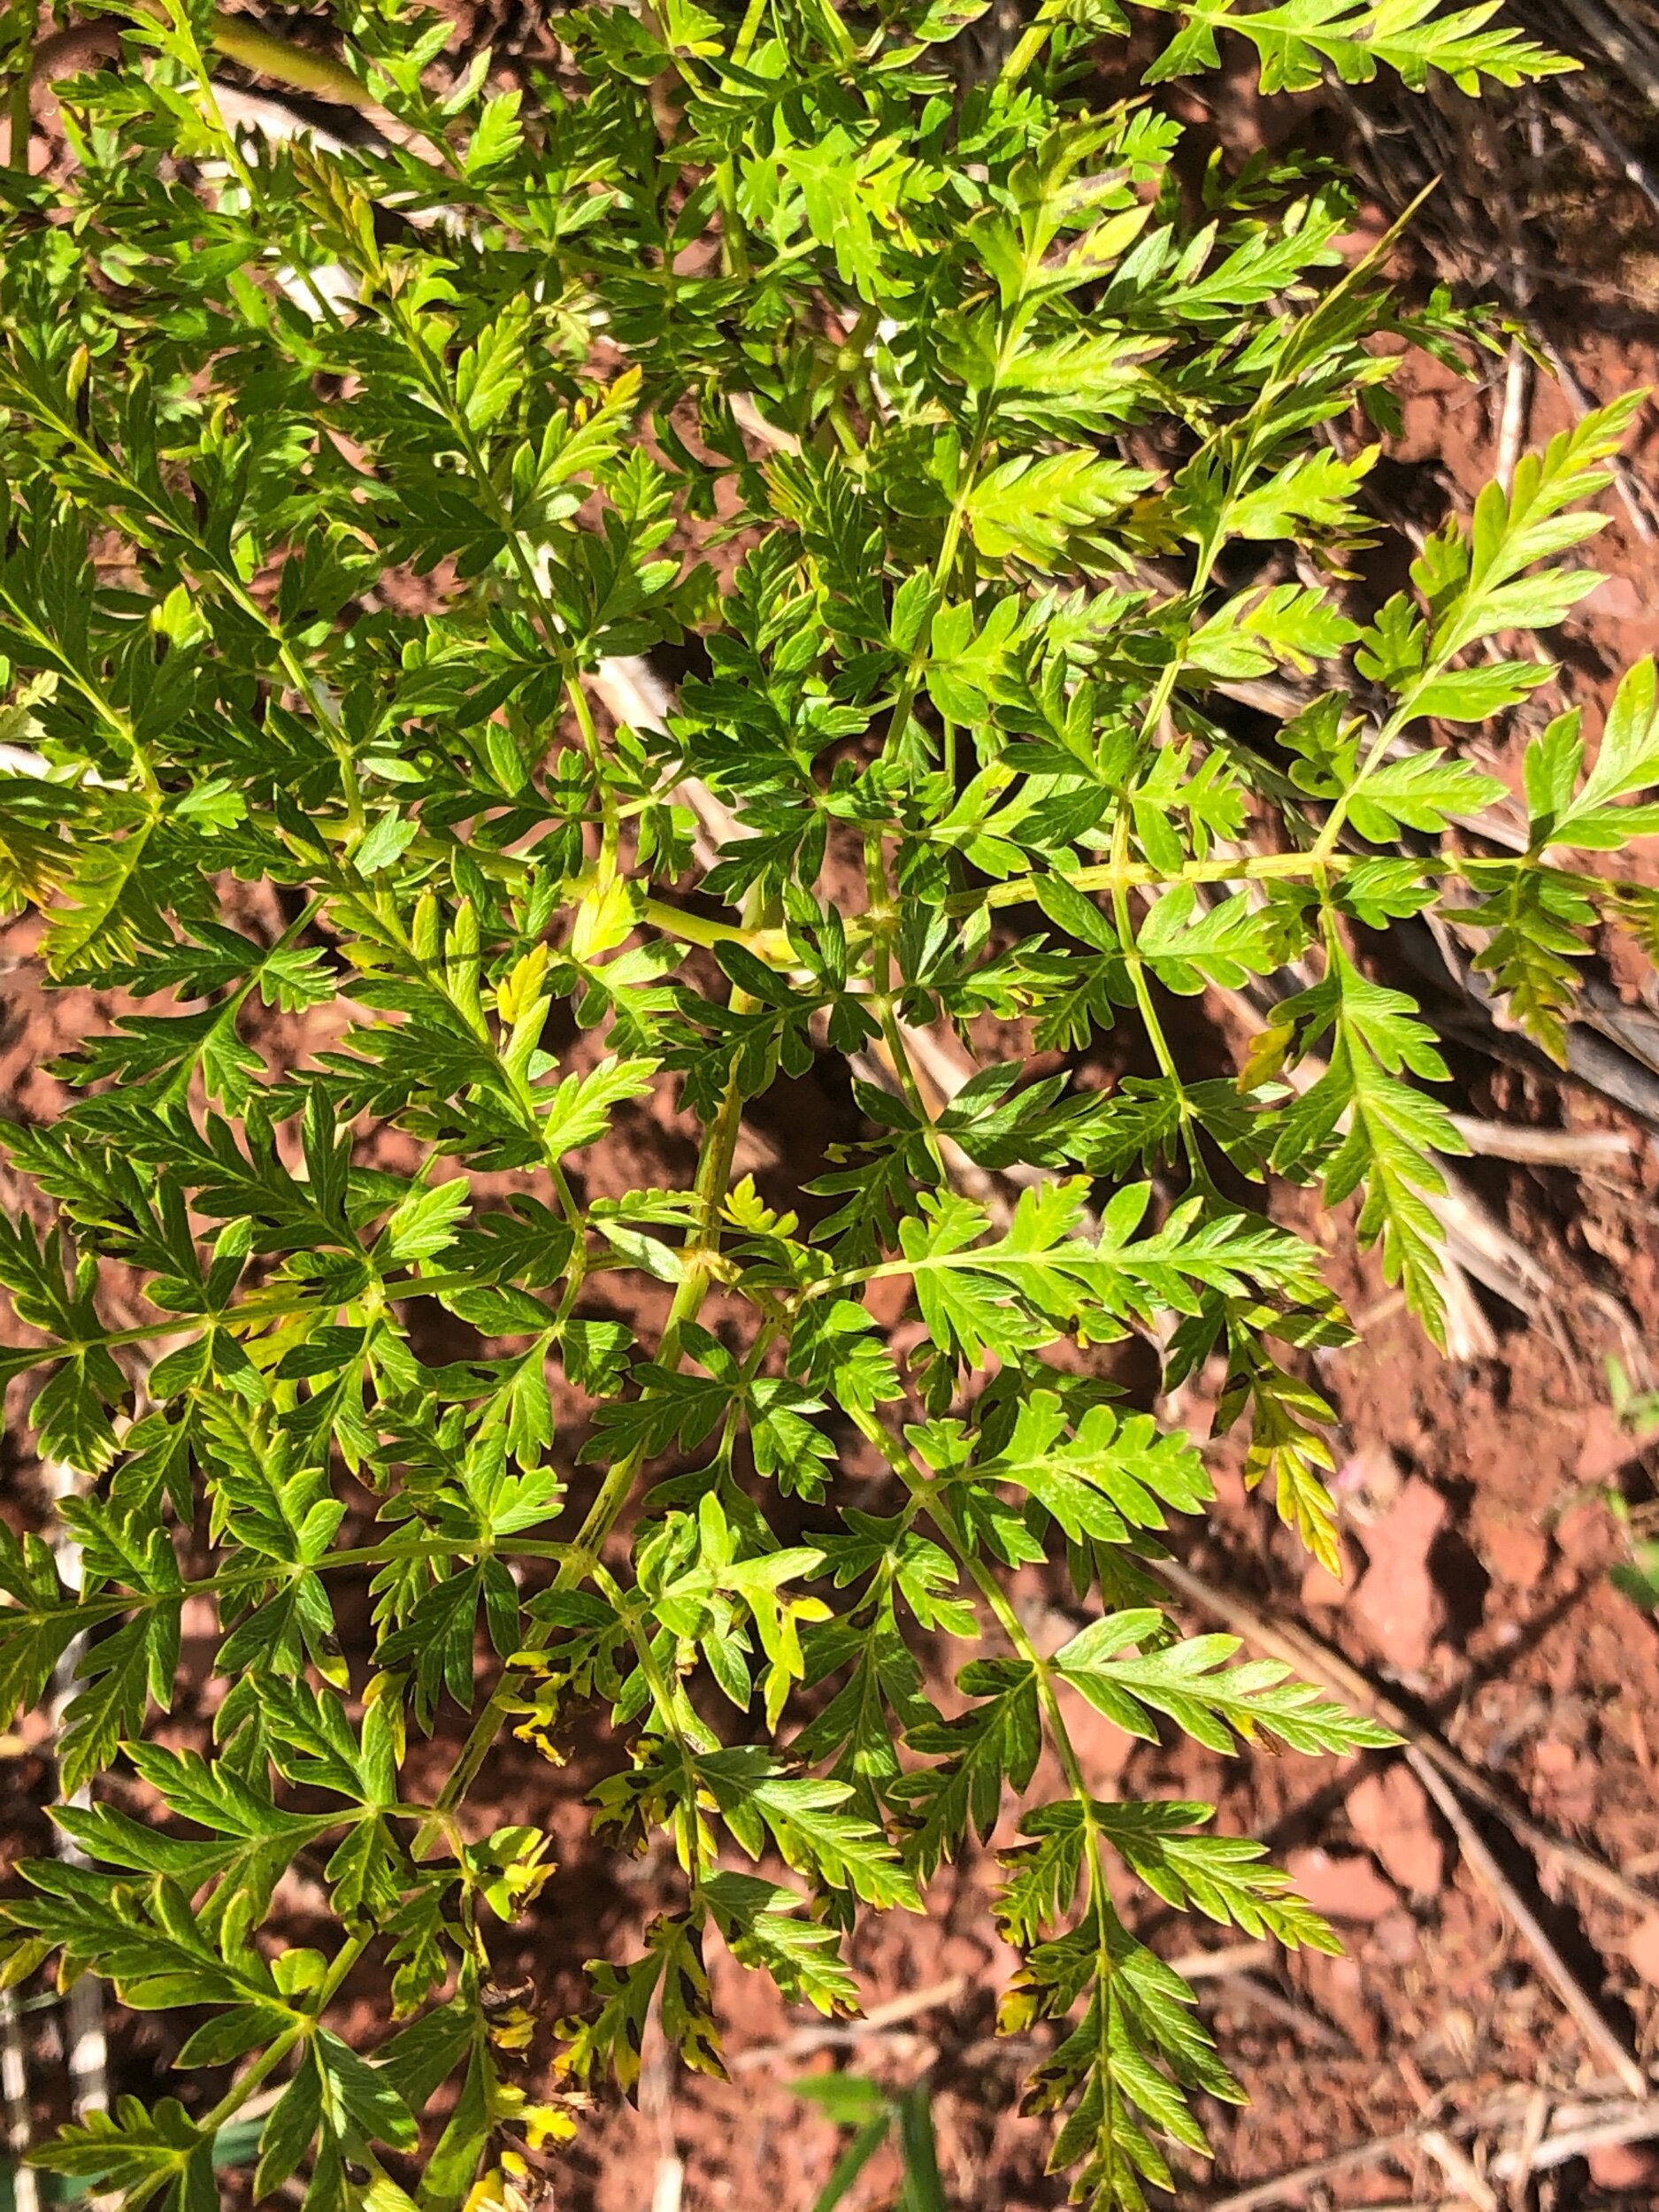 Western Osha- Ligusticum porteri (Apiaceae)